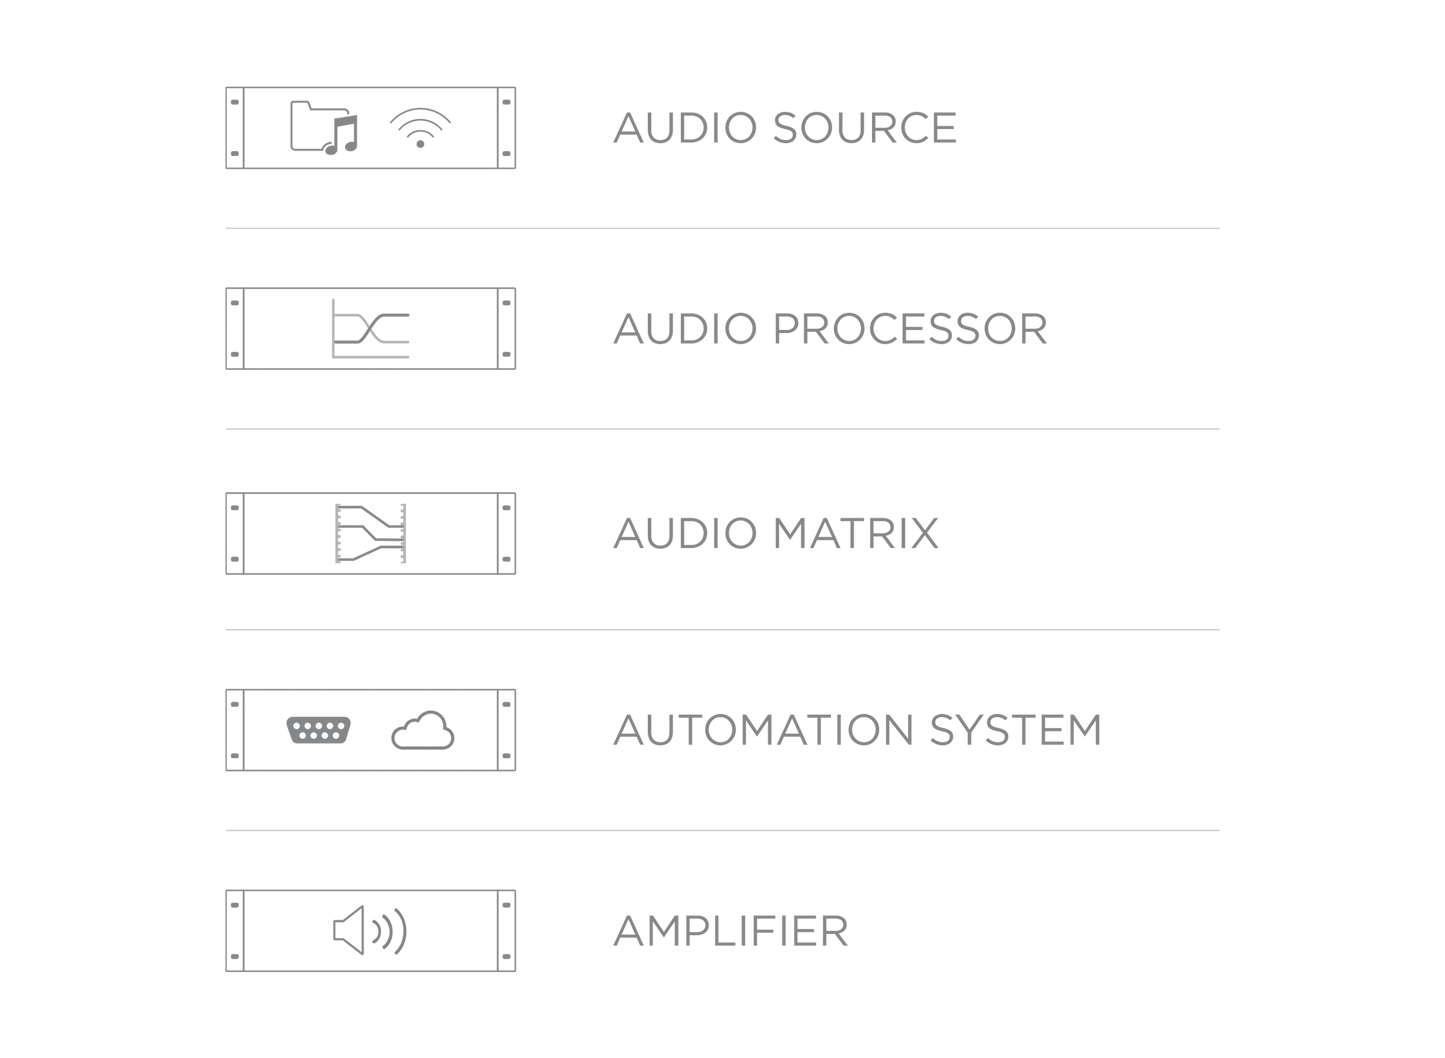 MFA216 All-in-one audio solution - 2 x 80W @ 4 Ohm - 160W @ 70/100V